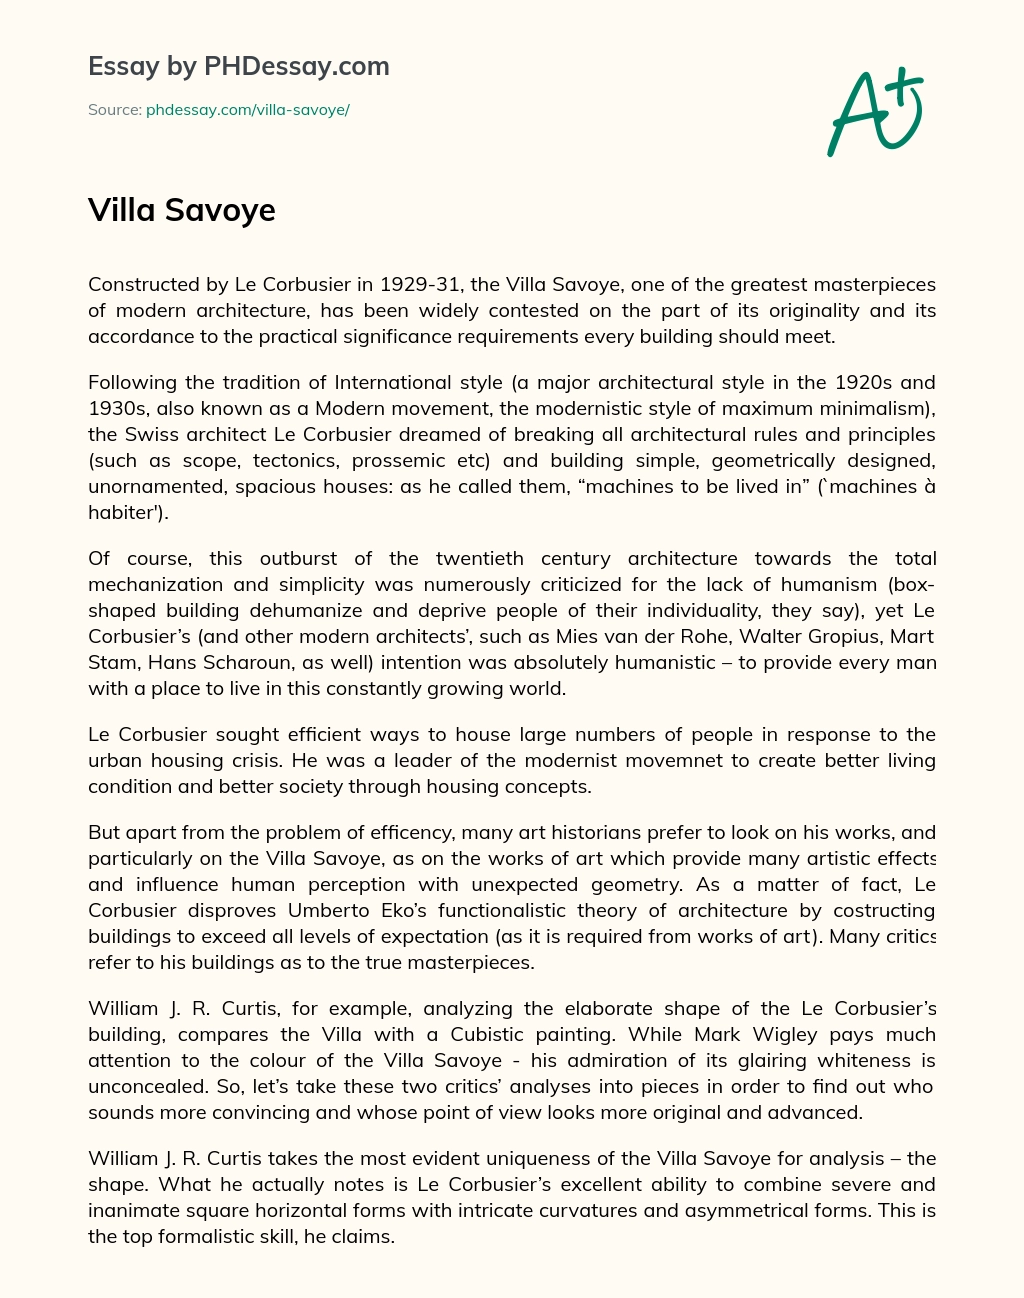 Villa Savoye essay